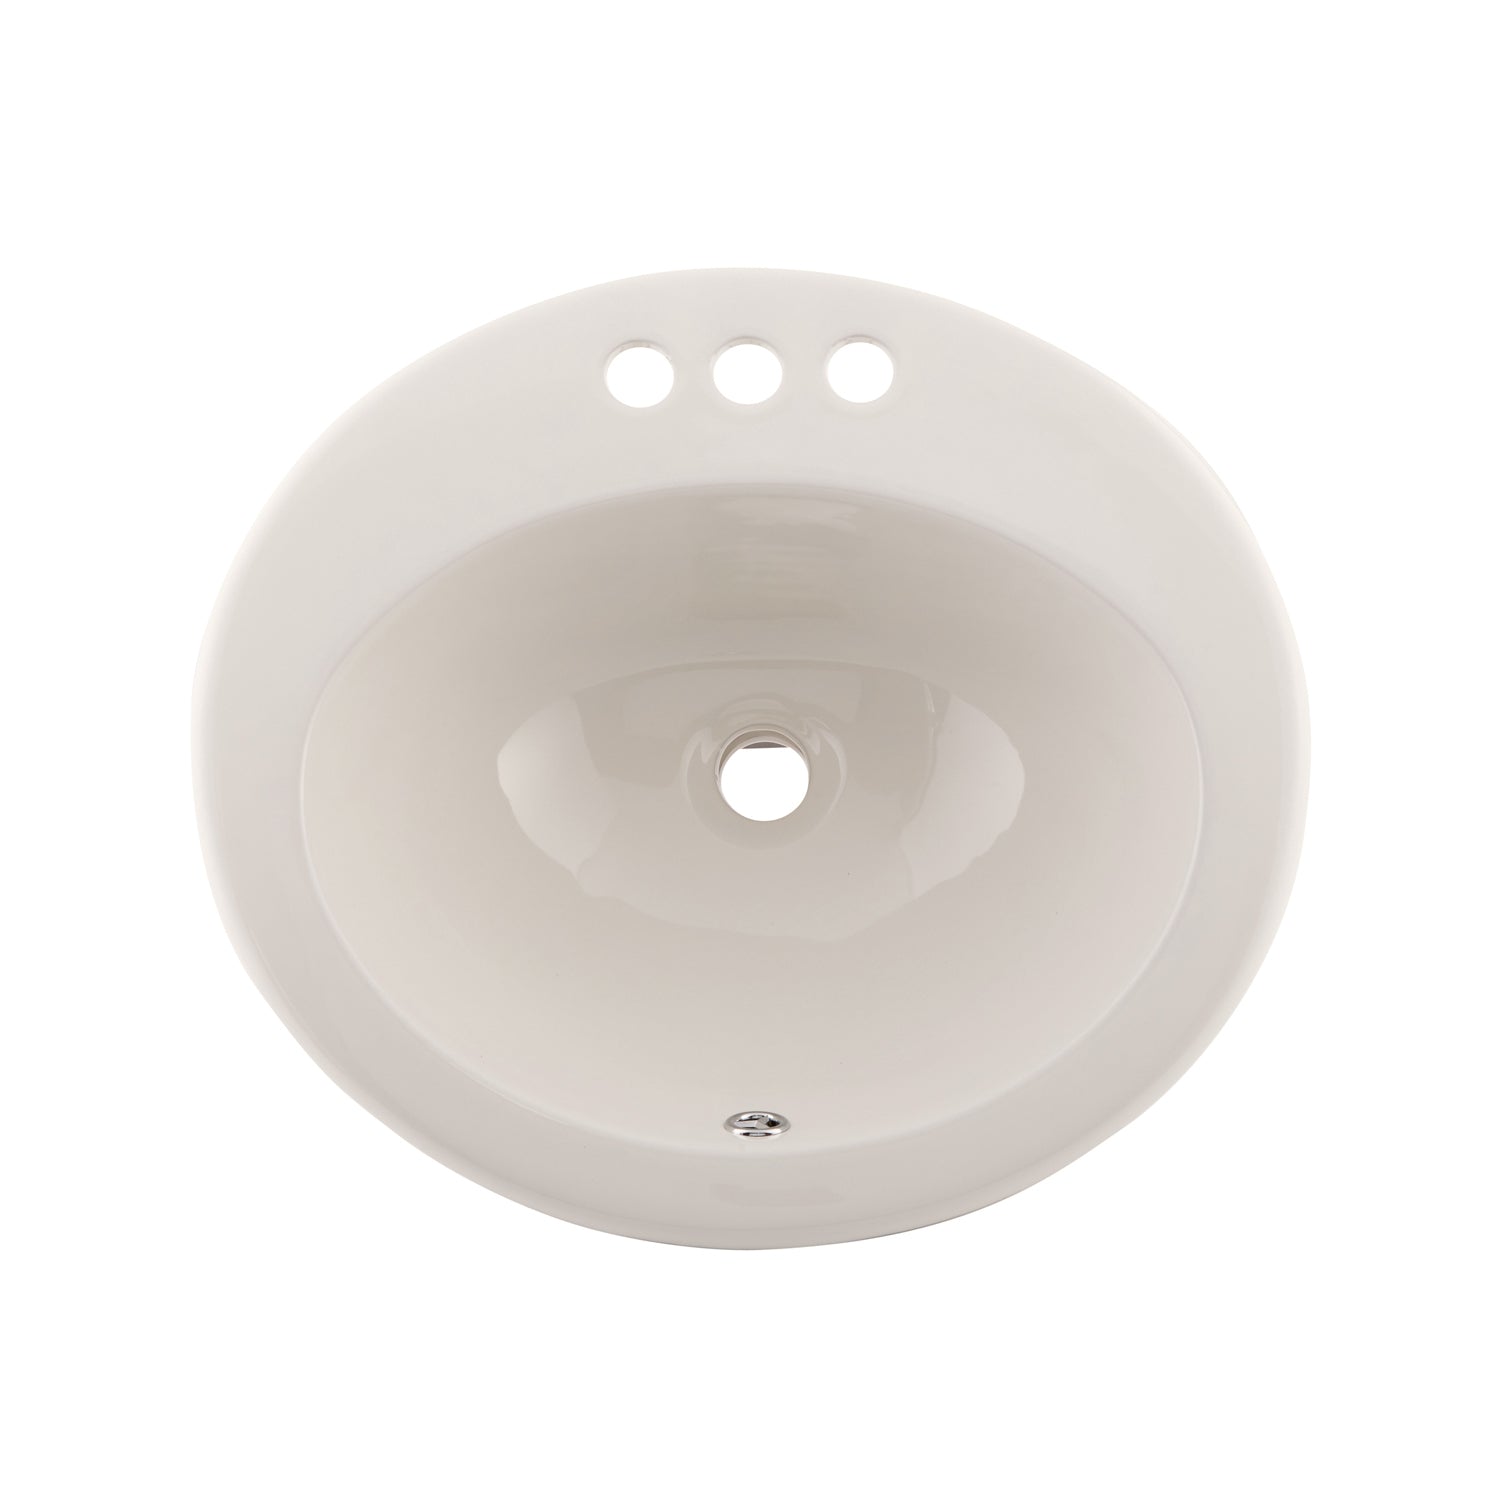 DAX Ceramic Single Bowl Top Mount Bathroom Sink, Ivory Finish,  19-11/16 x 17-11/16 x 8-1/4 Inches (BSN-209-I)